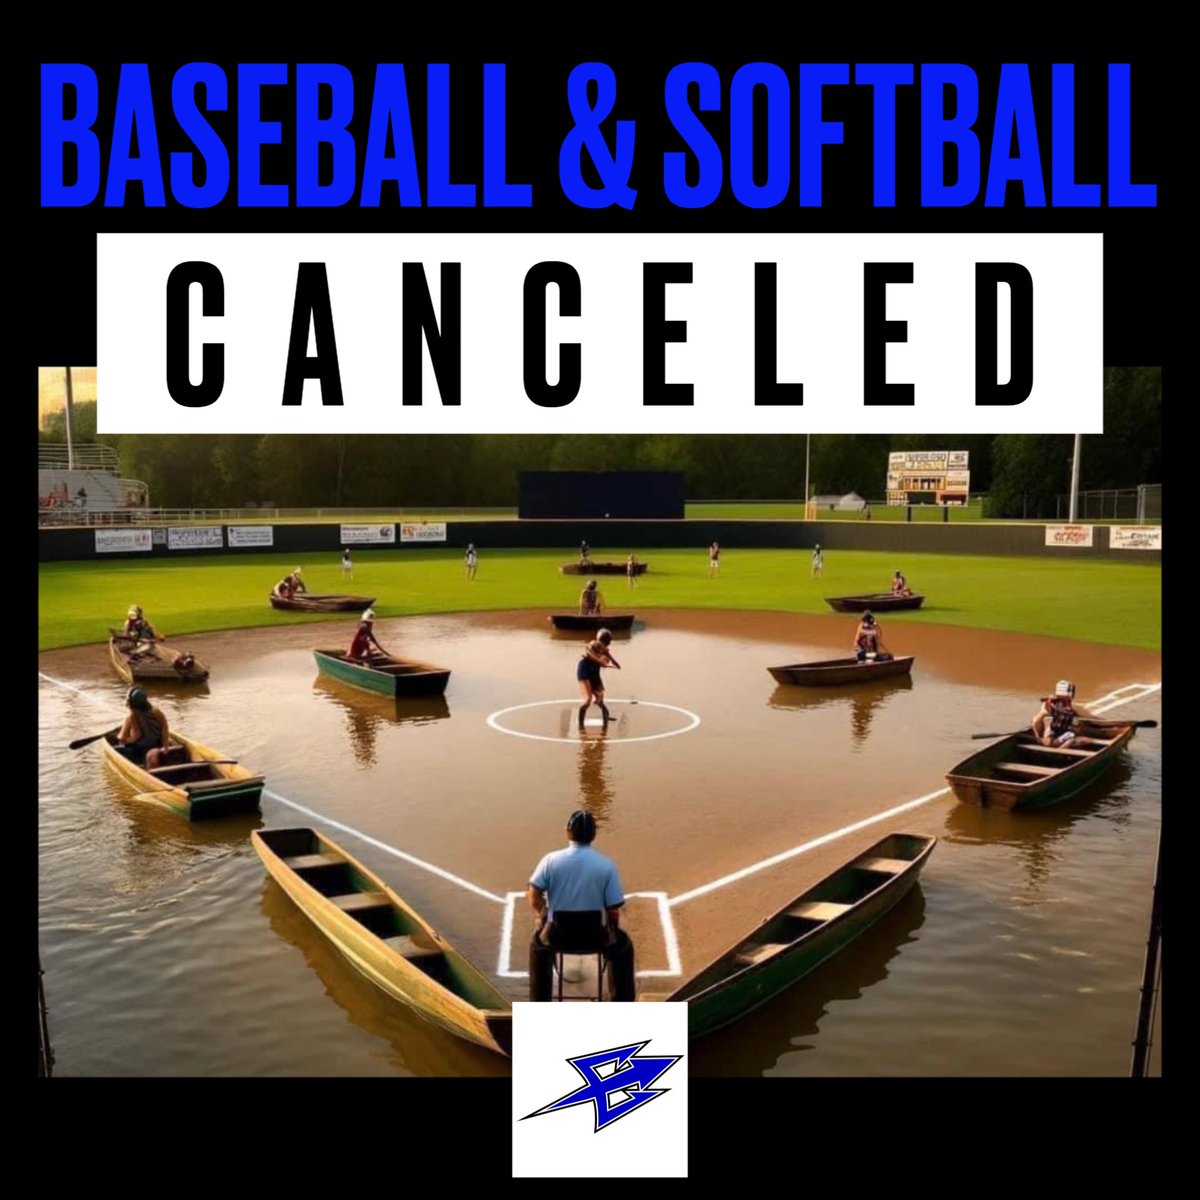 Tonight's Baseball & Softball games vs Hoopeston have been canceled.